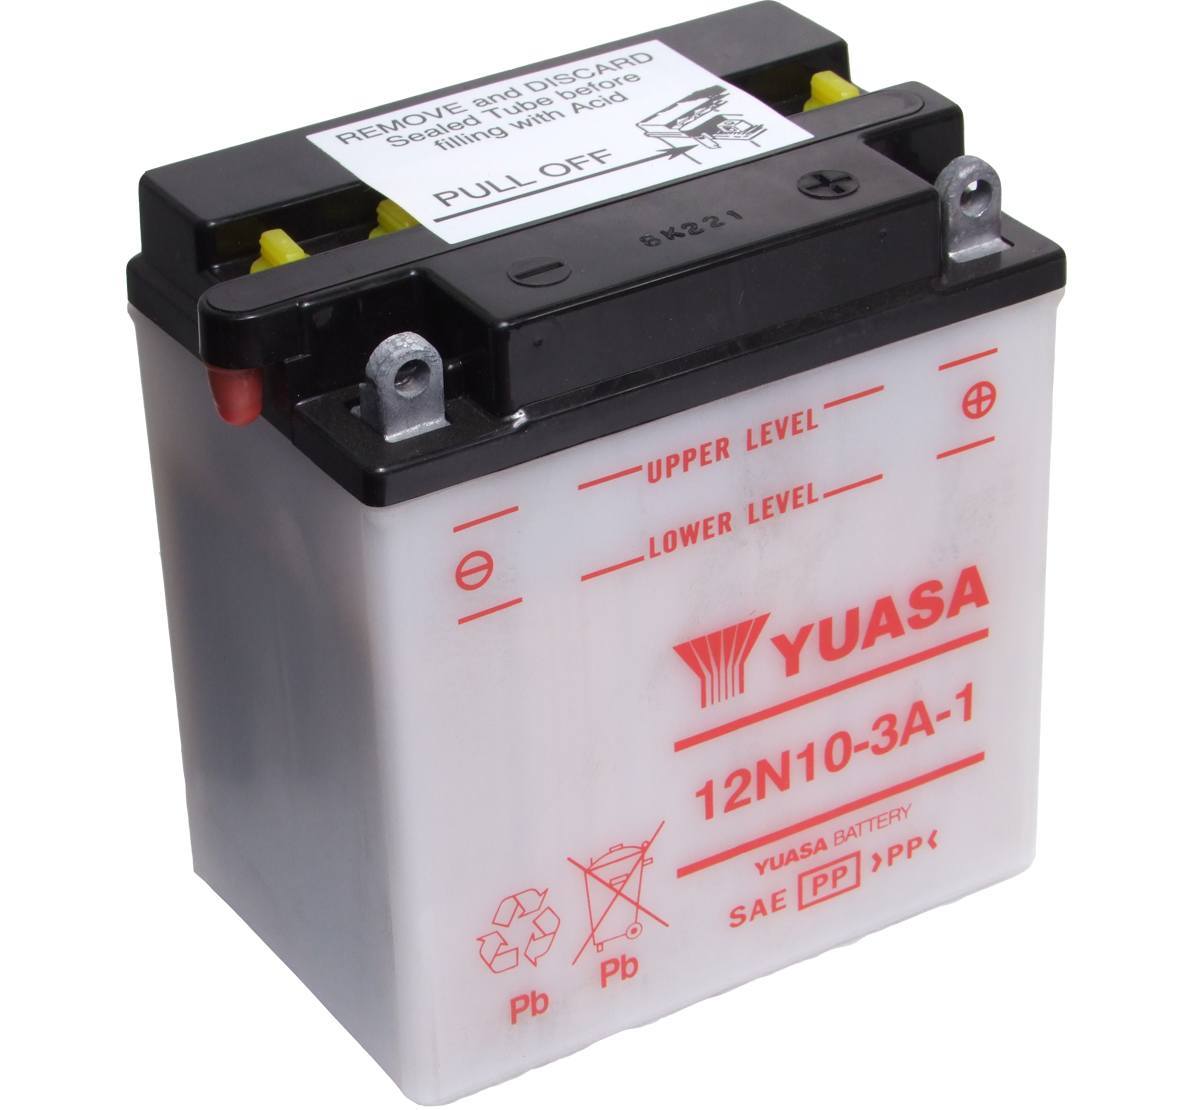 12N10-3A-1 Yuasa Motorcycle Battery